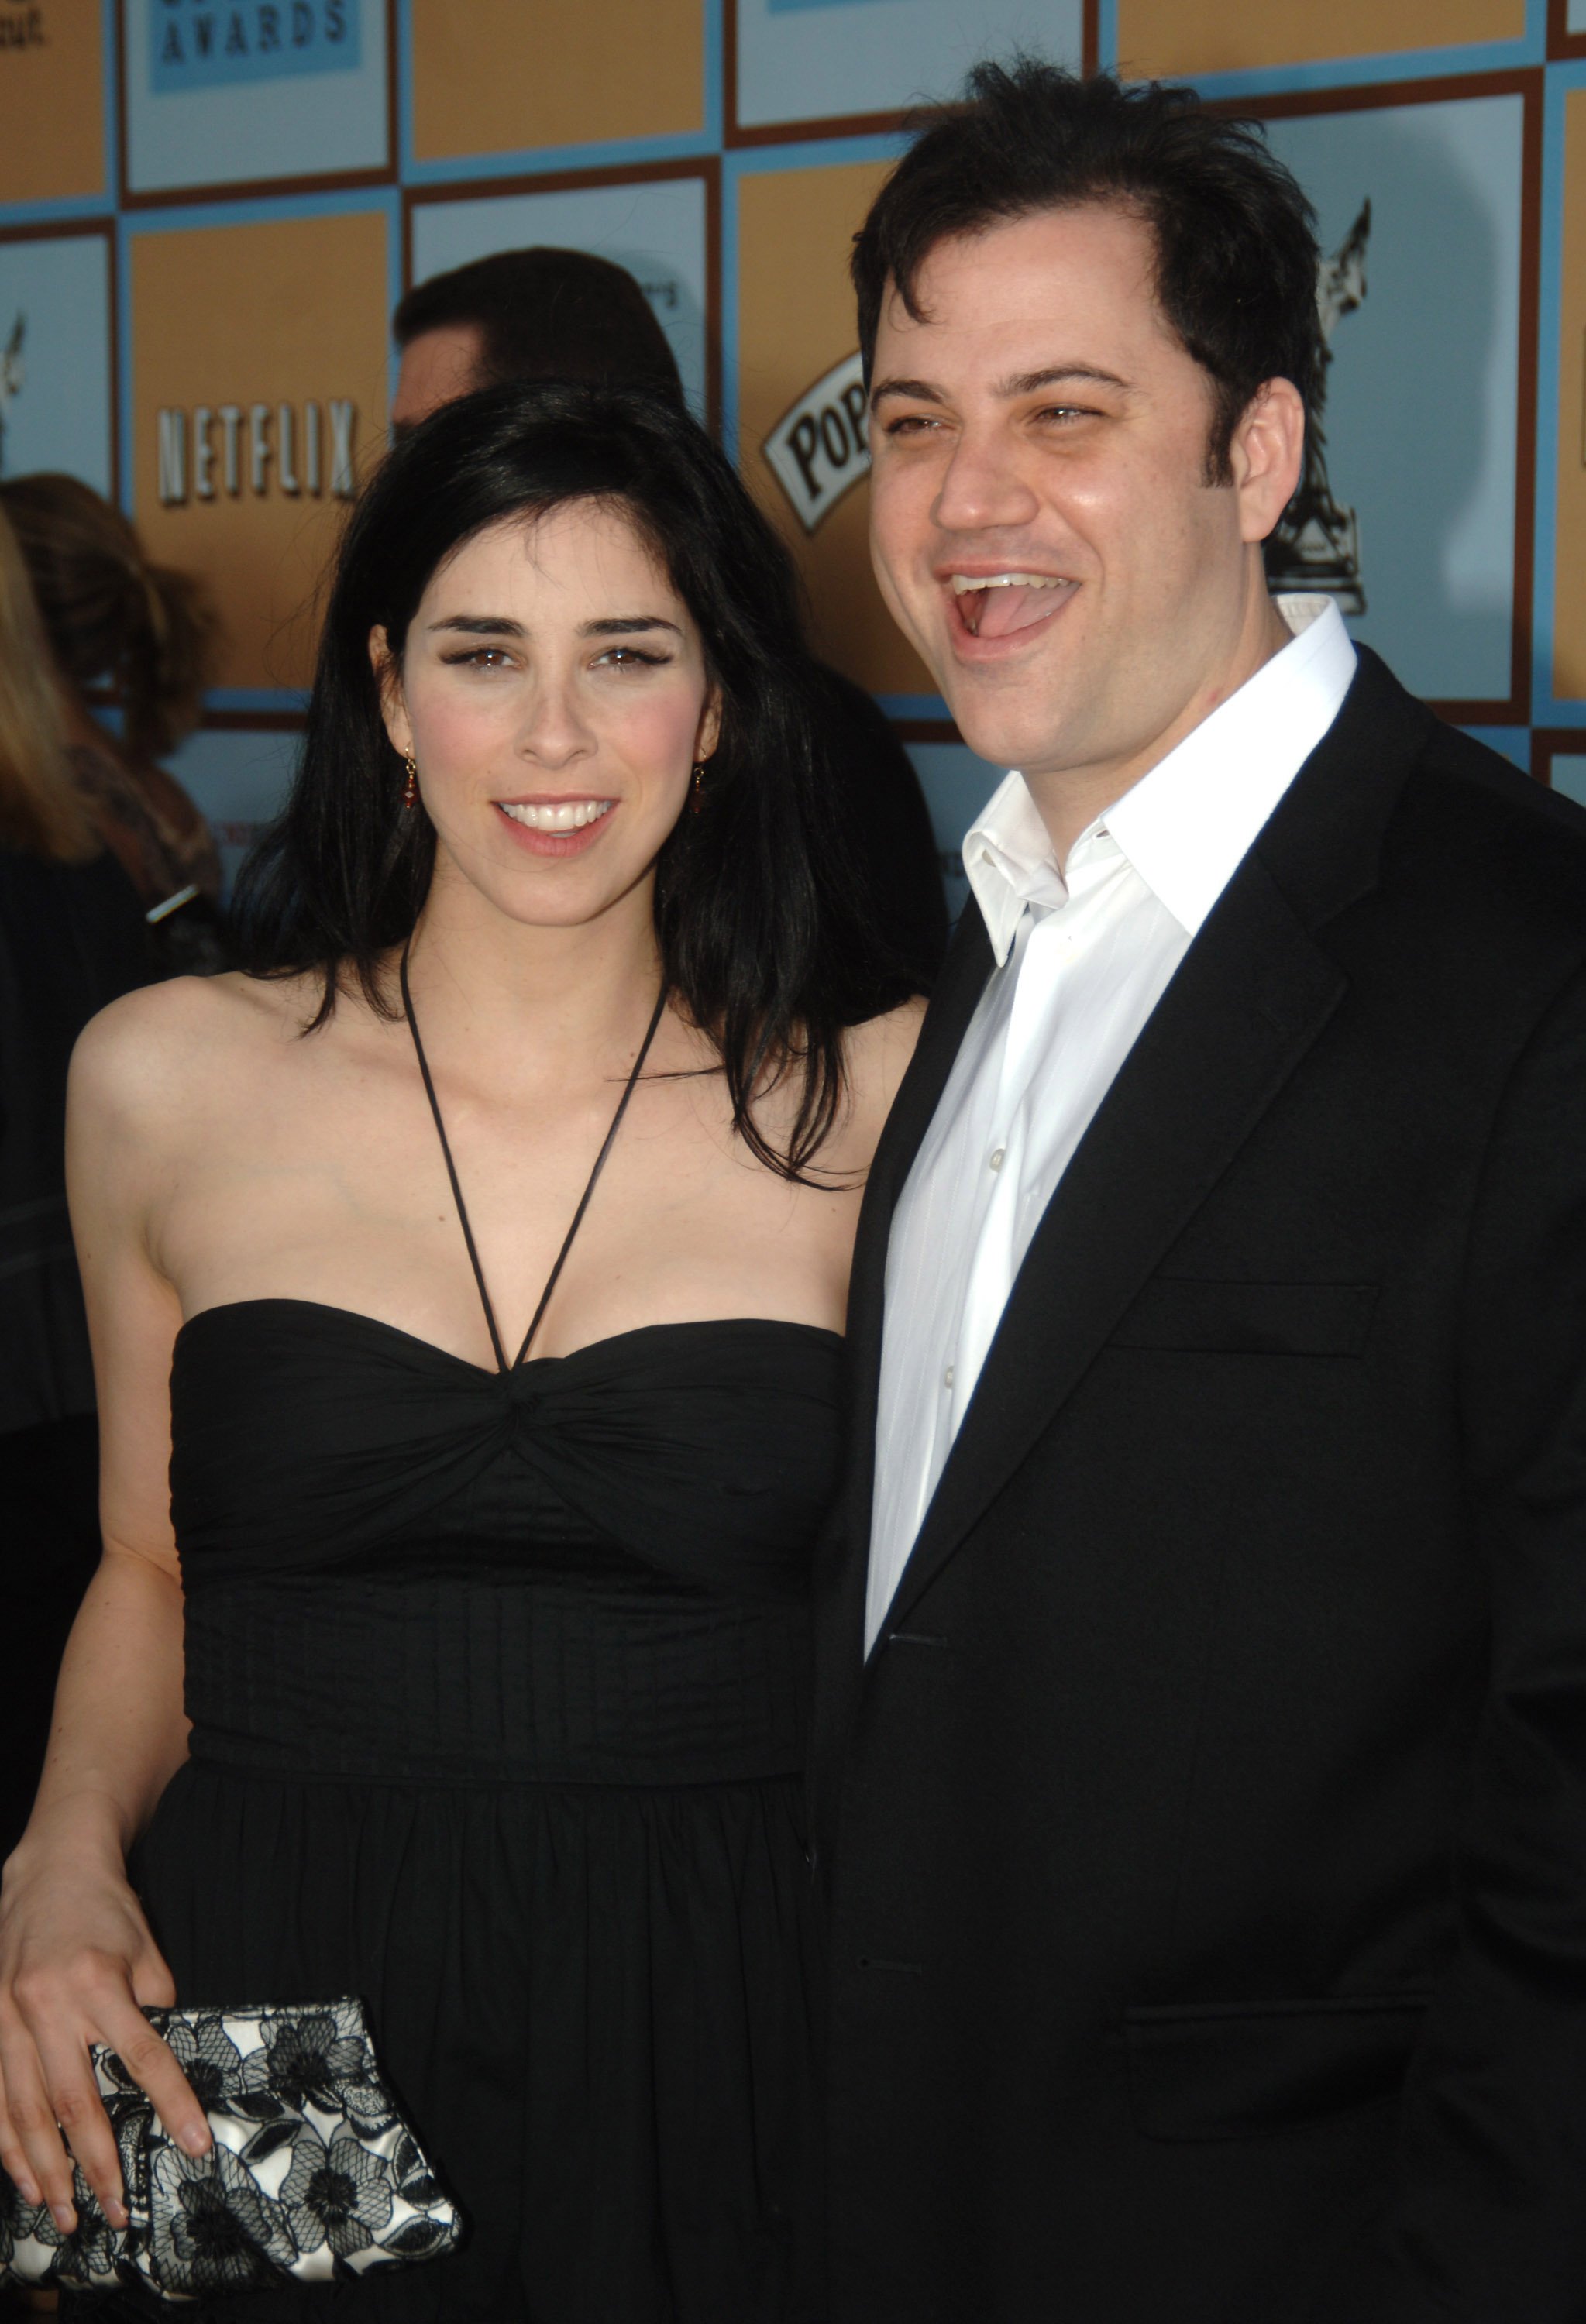 Sara Sara Silverman and Jimmy Kimmel at the 2006 Independent Spirit Awards in Santa Monica, California on March 4, 2006.